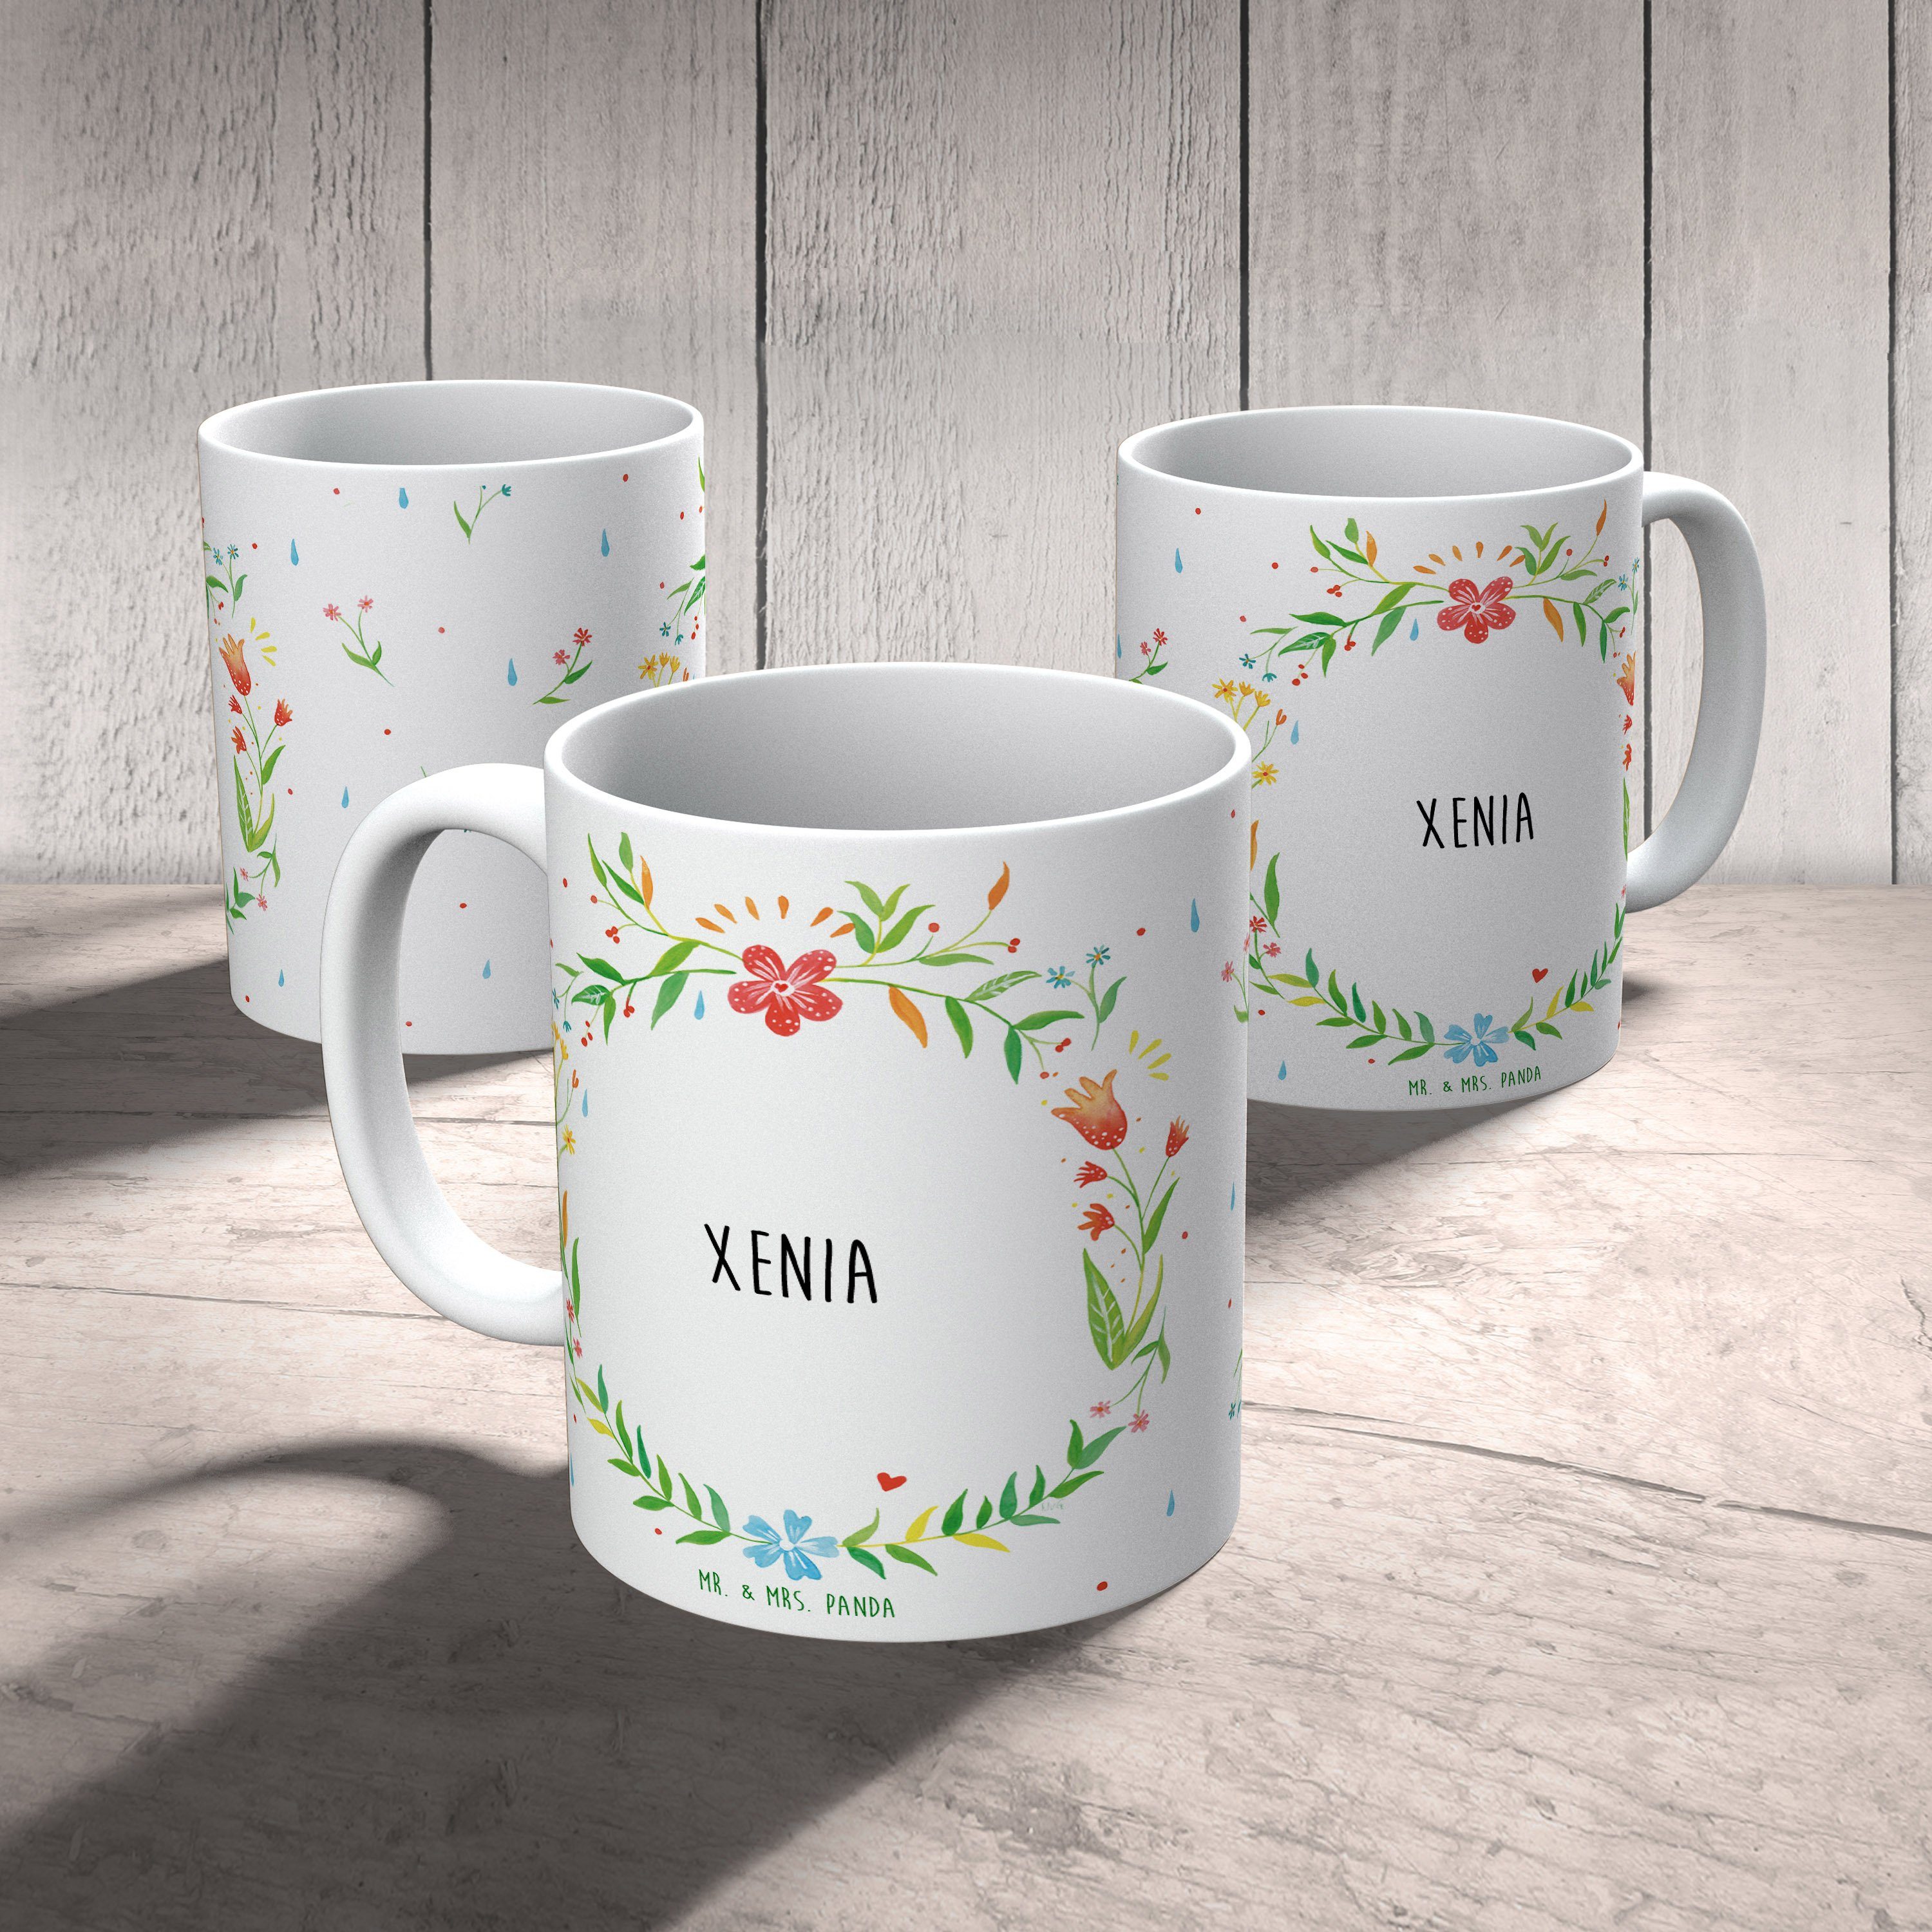 & Panda Tasse Tasse, Büro Keramik Mr. Geschenk, Teebecher, Kaffeetasse, Mrs. - Geschenk, Xenia Tasse,